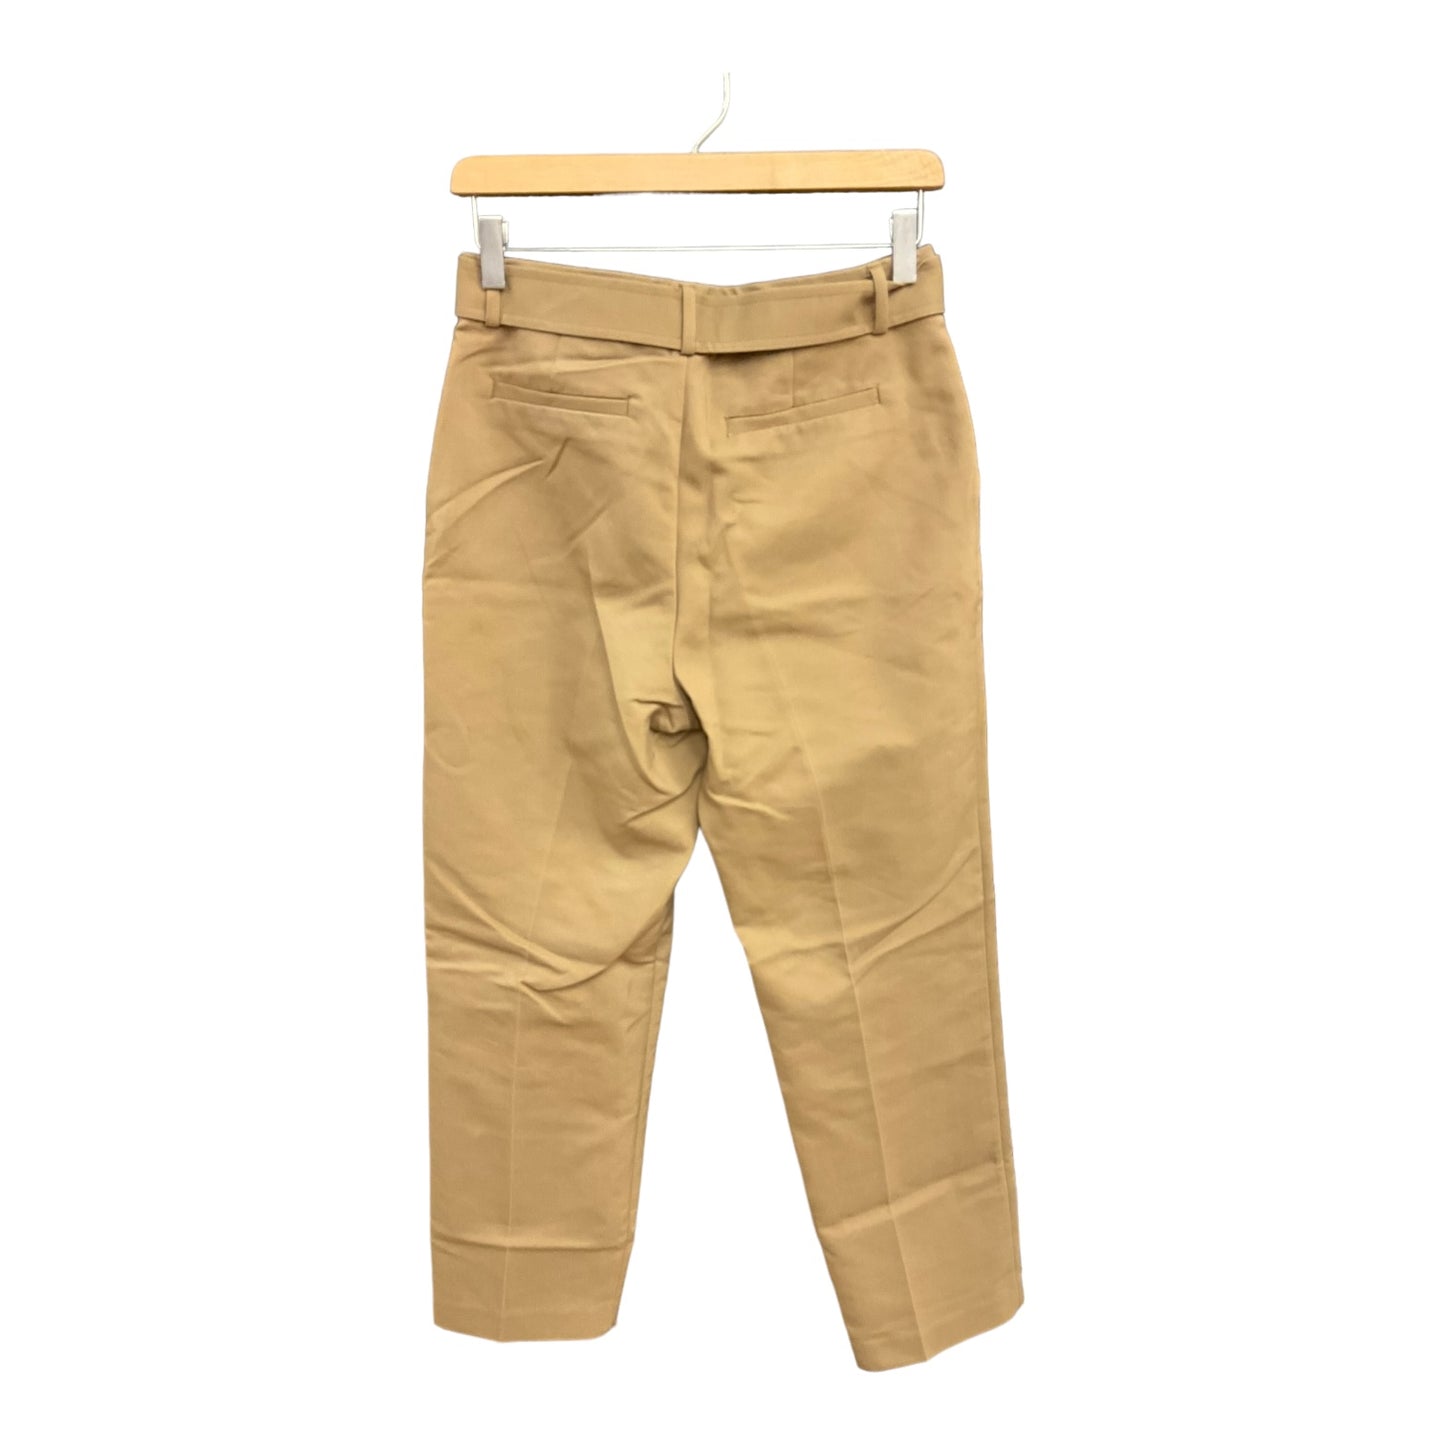 Pants Work/dress By Crosby  Size: 6